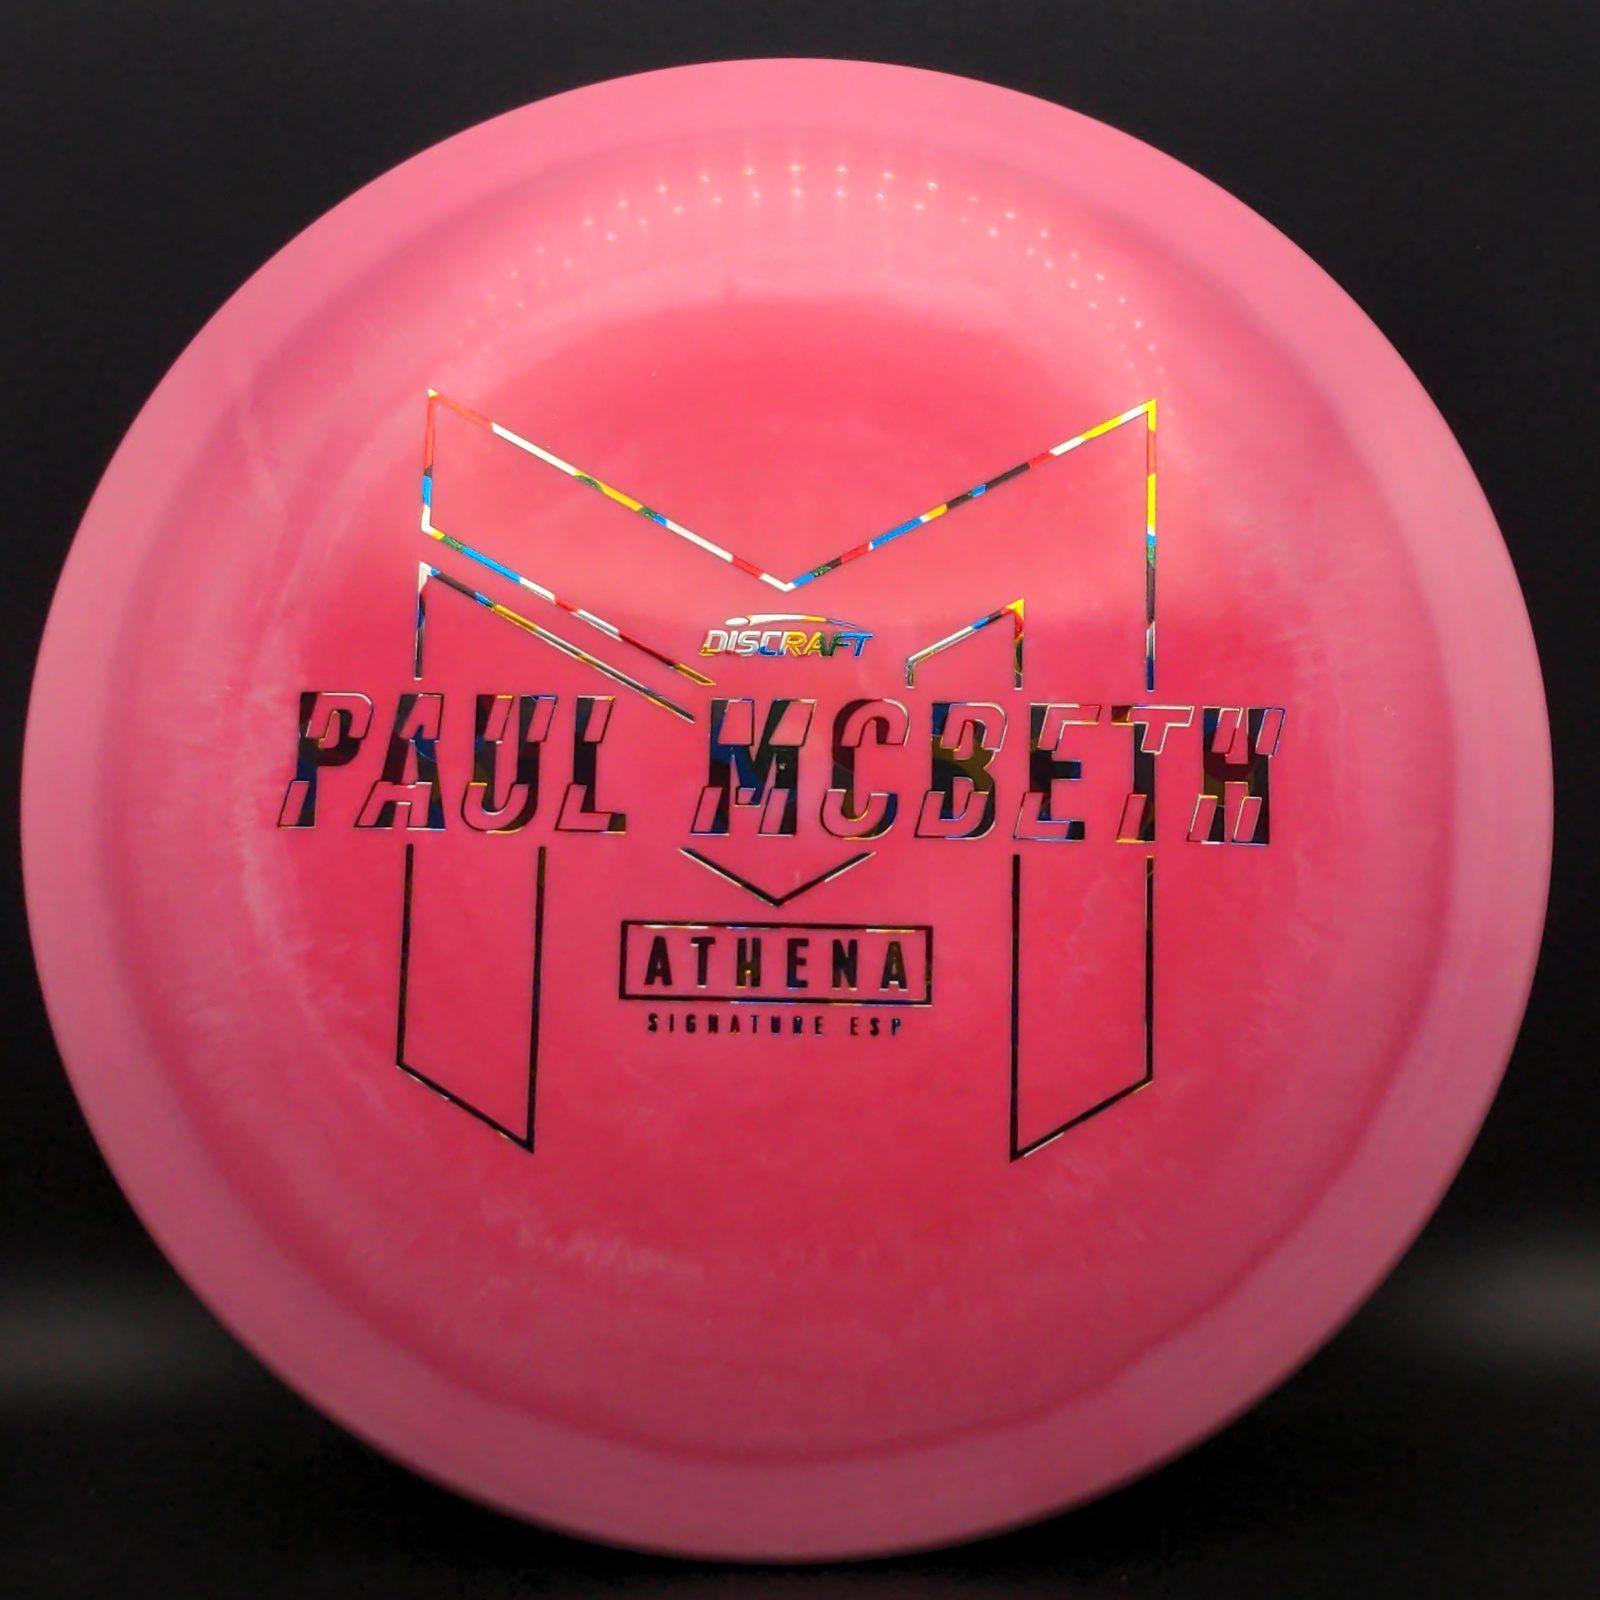 ESP Athena - Paul McBeth Signature Discraft